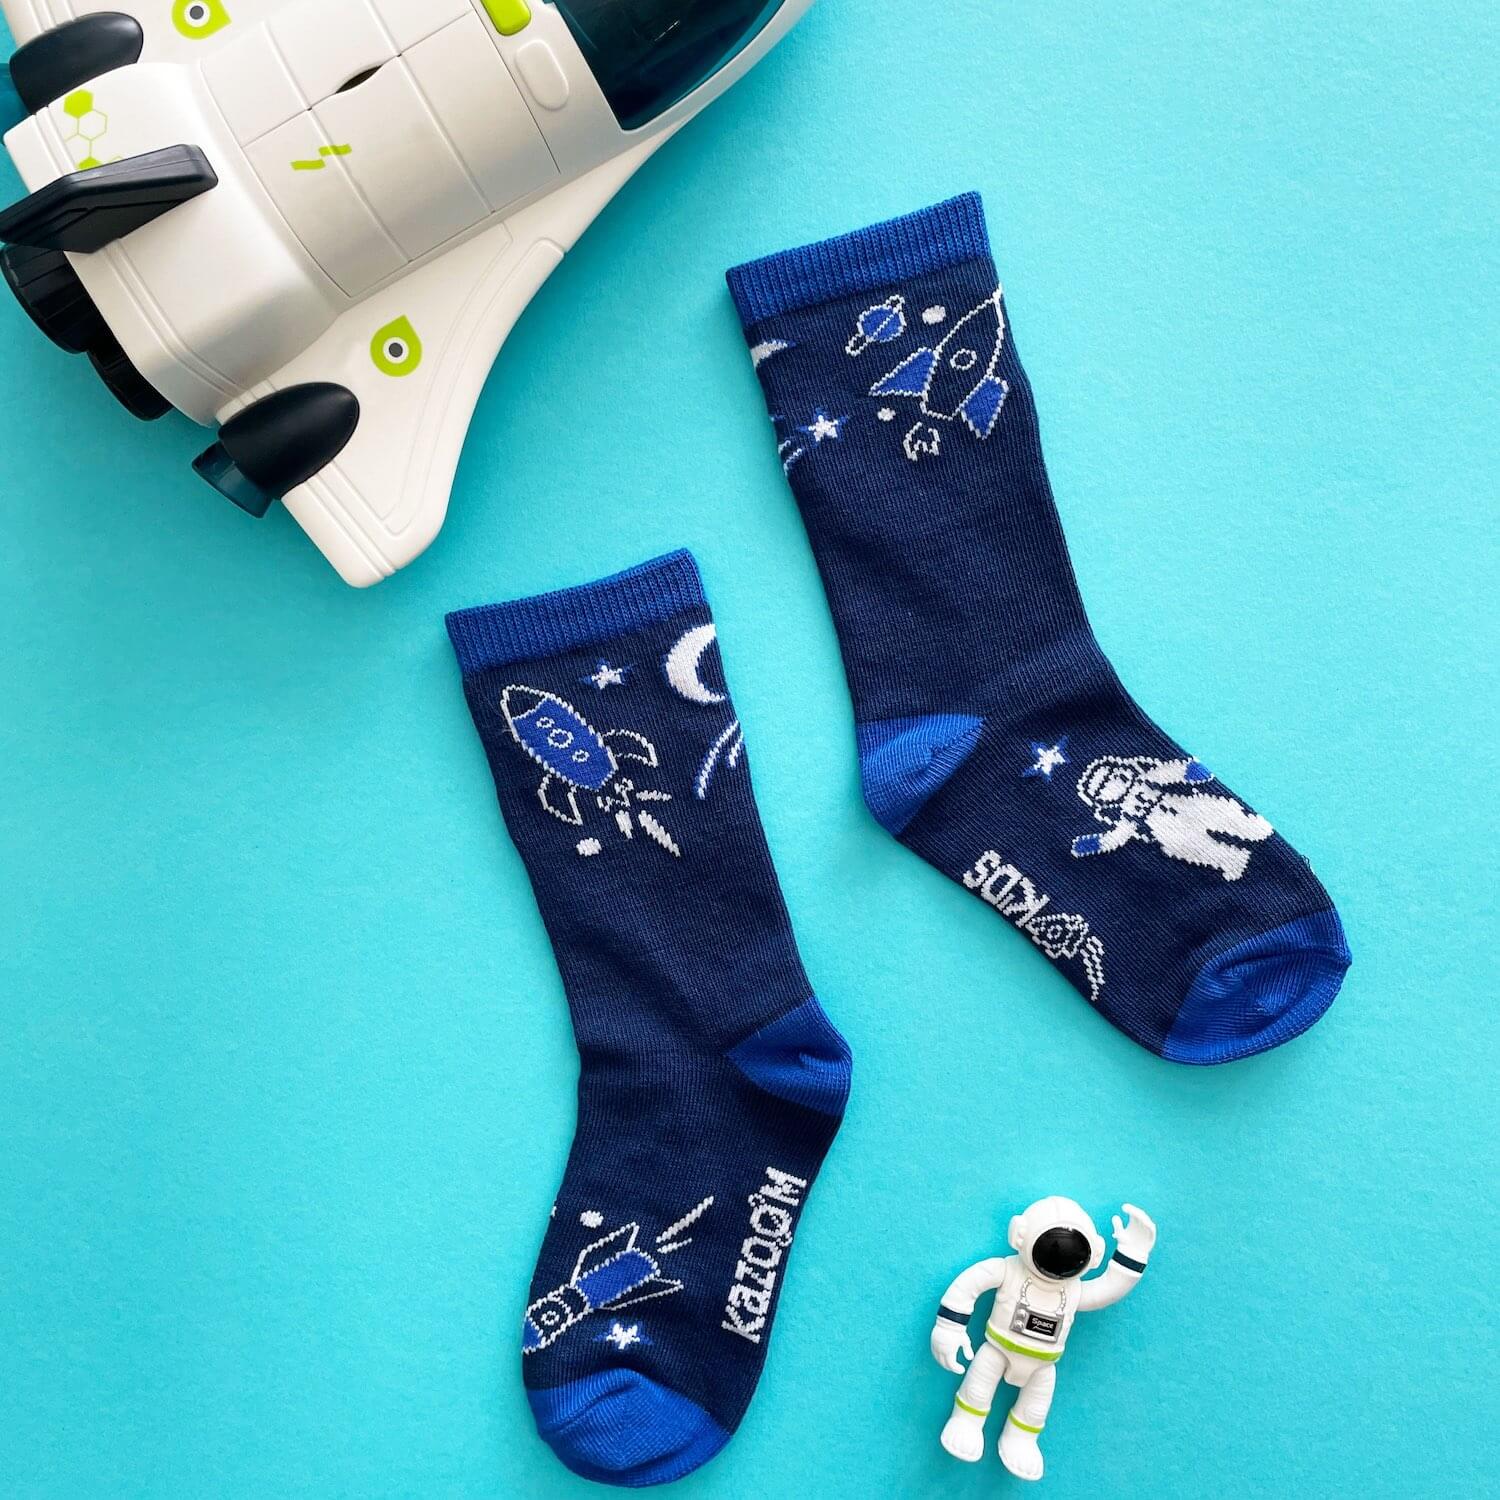 Astronaut Kid Socks - Blue Space Ship Socks and Blue rocket Socks